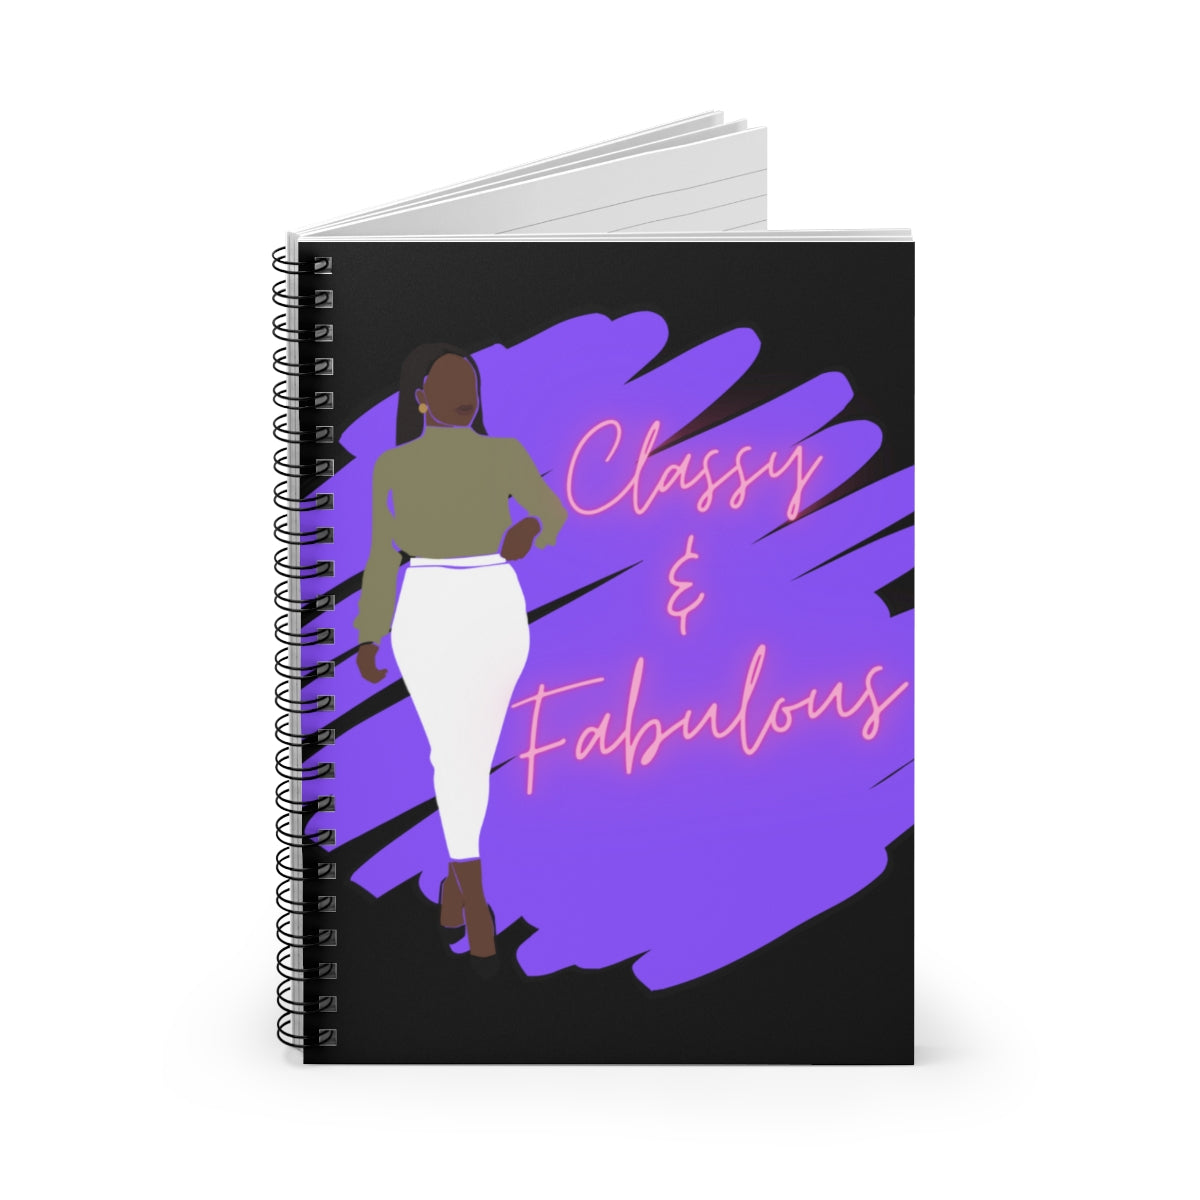 Classy & Fabulous Purple Spiral Notebook - Ruled Line